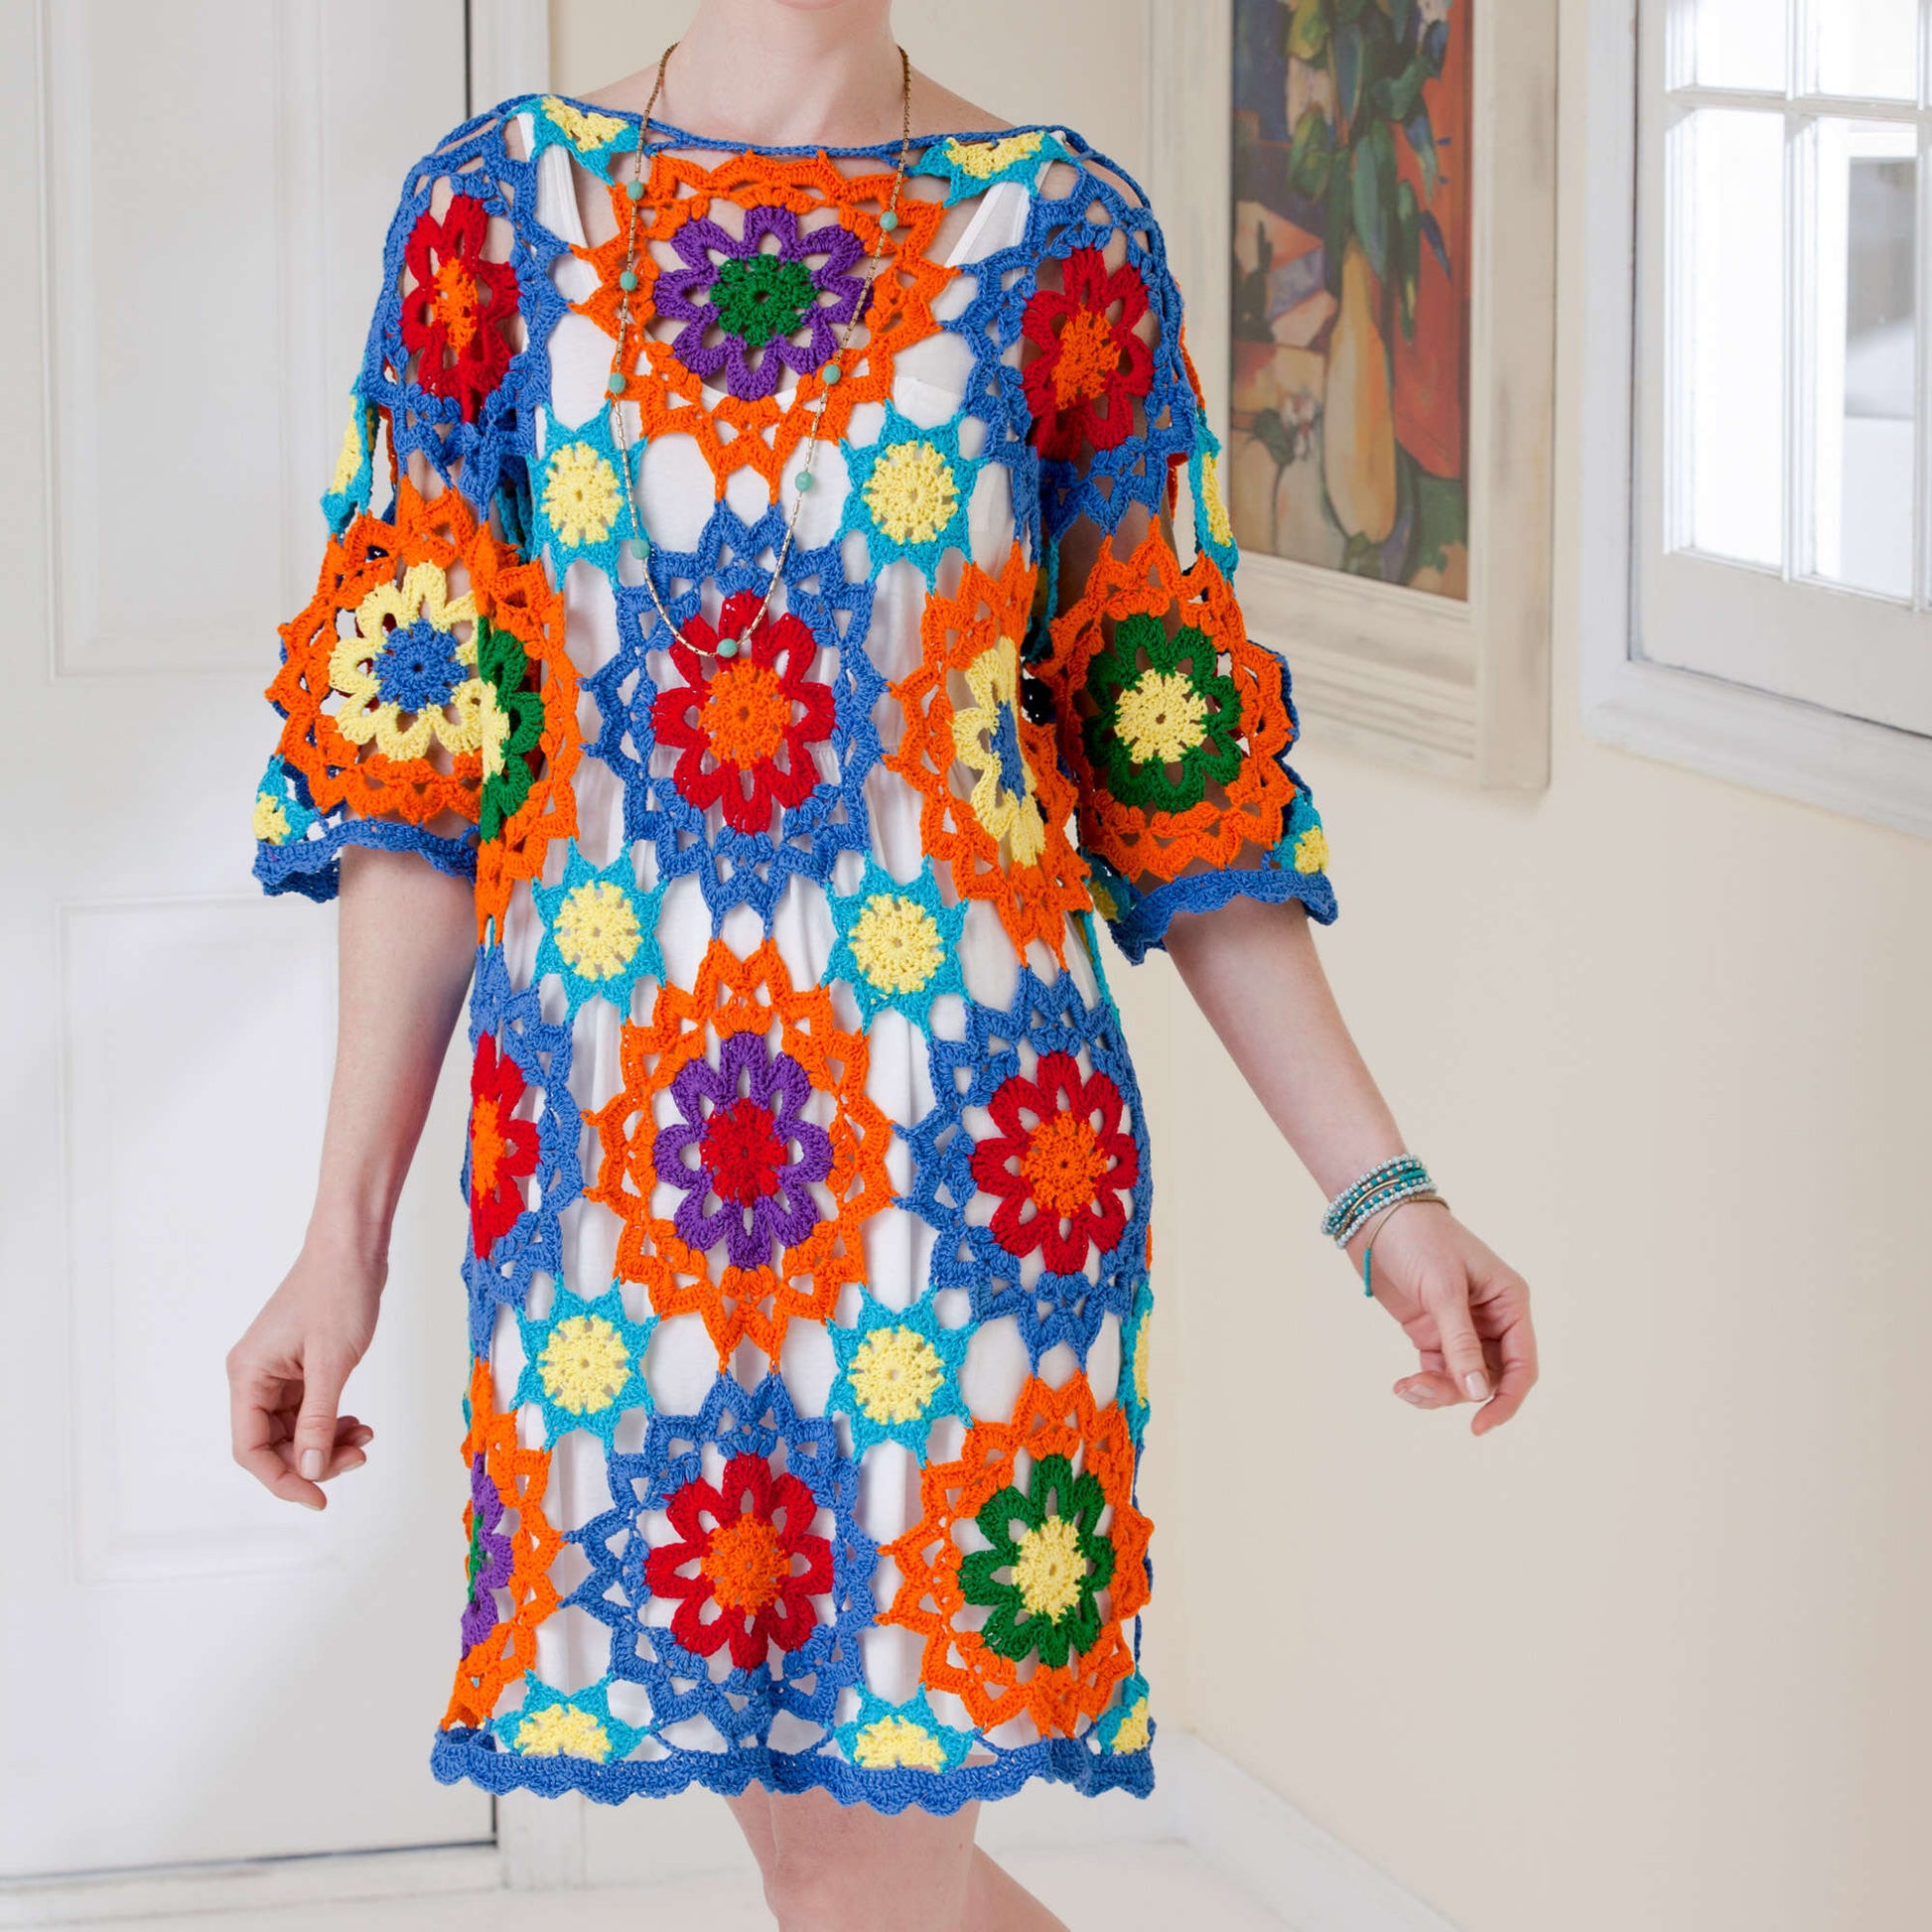 Free Aunt Lydia's Bright & Beautiful Top Crochet Pattern